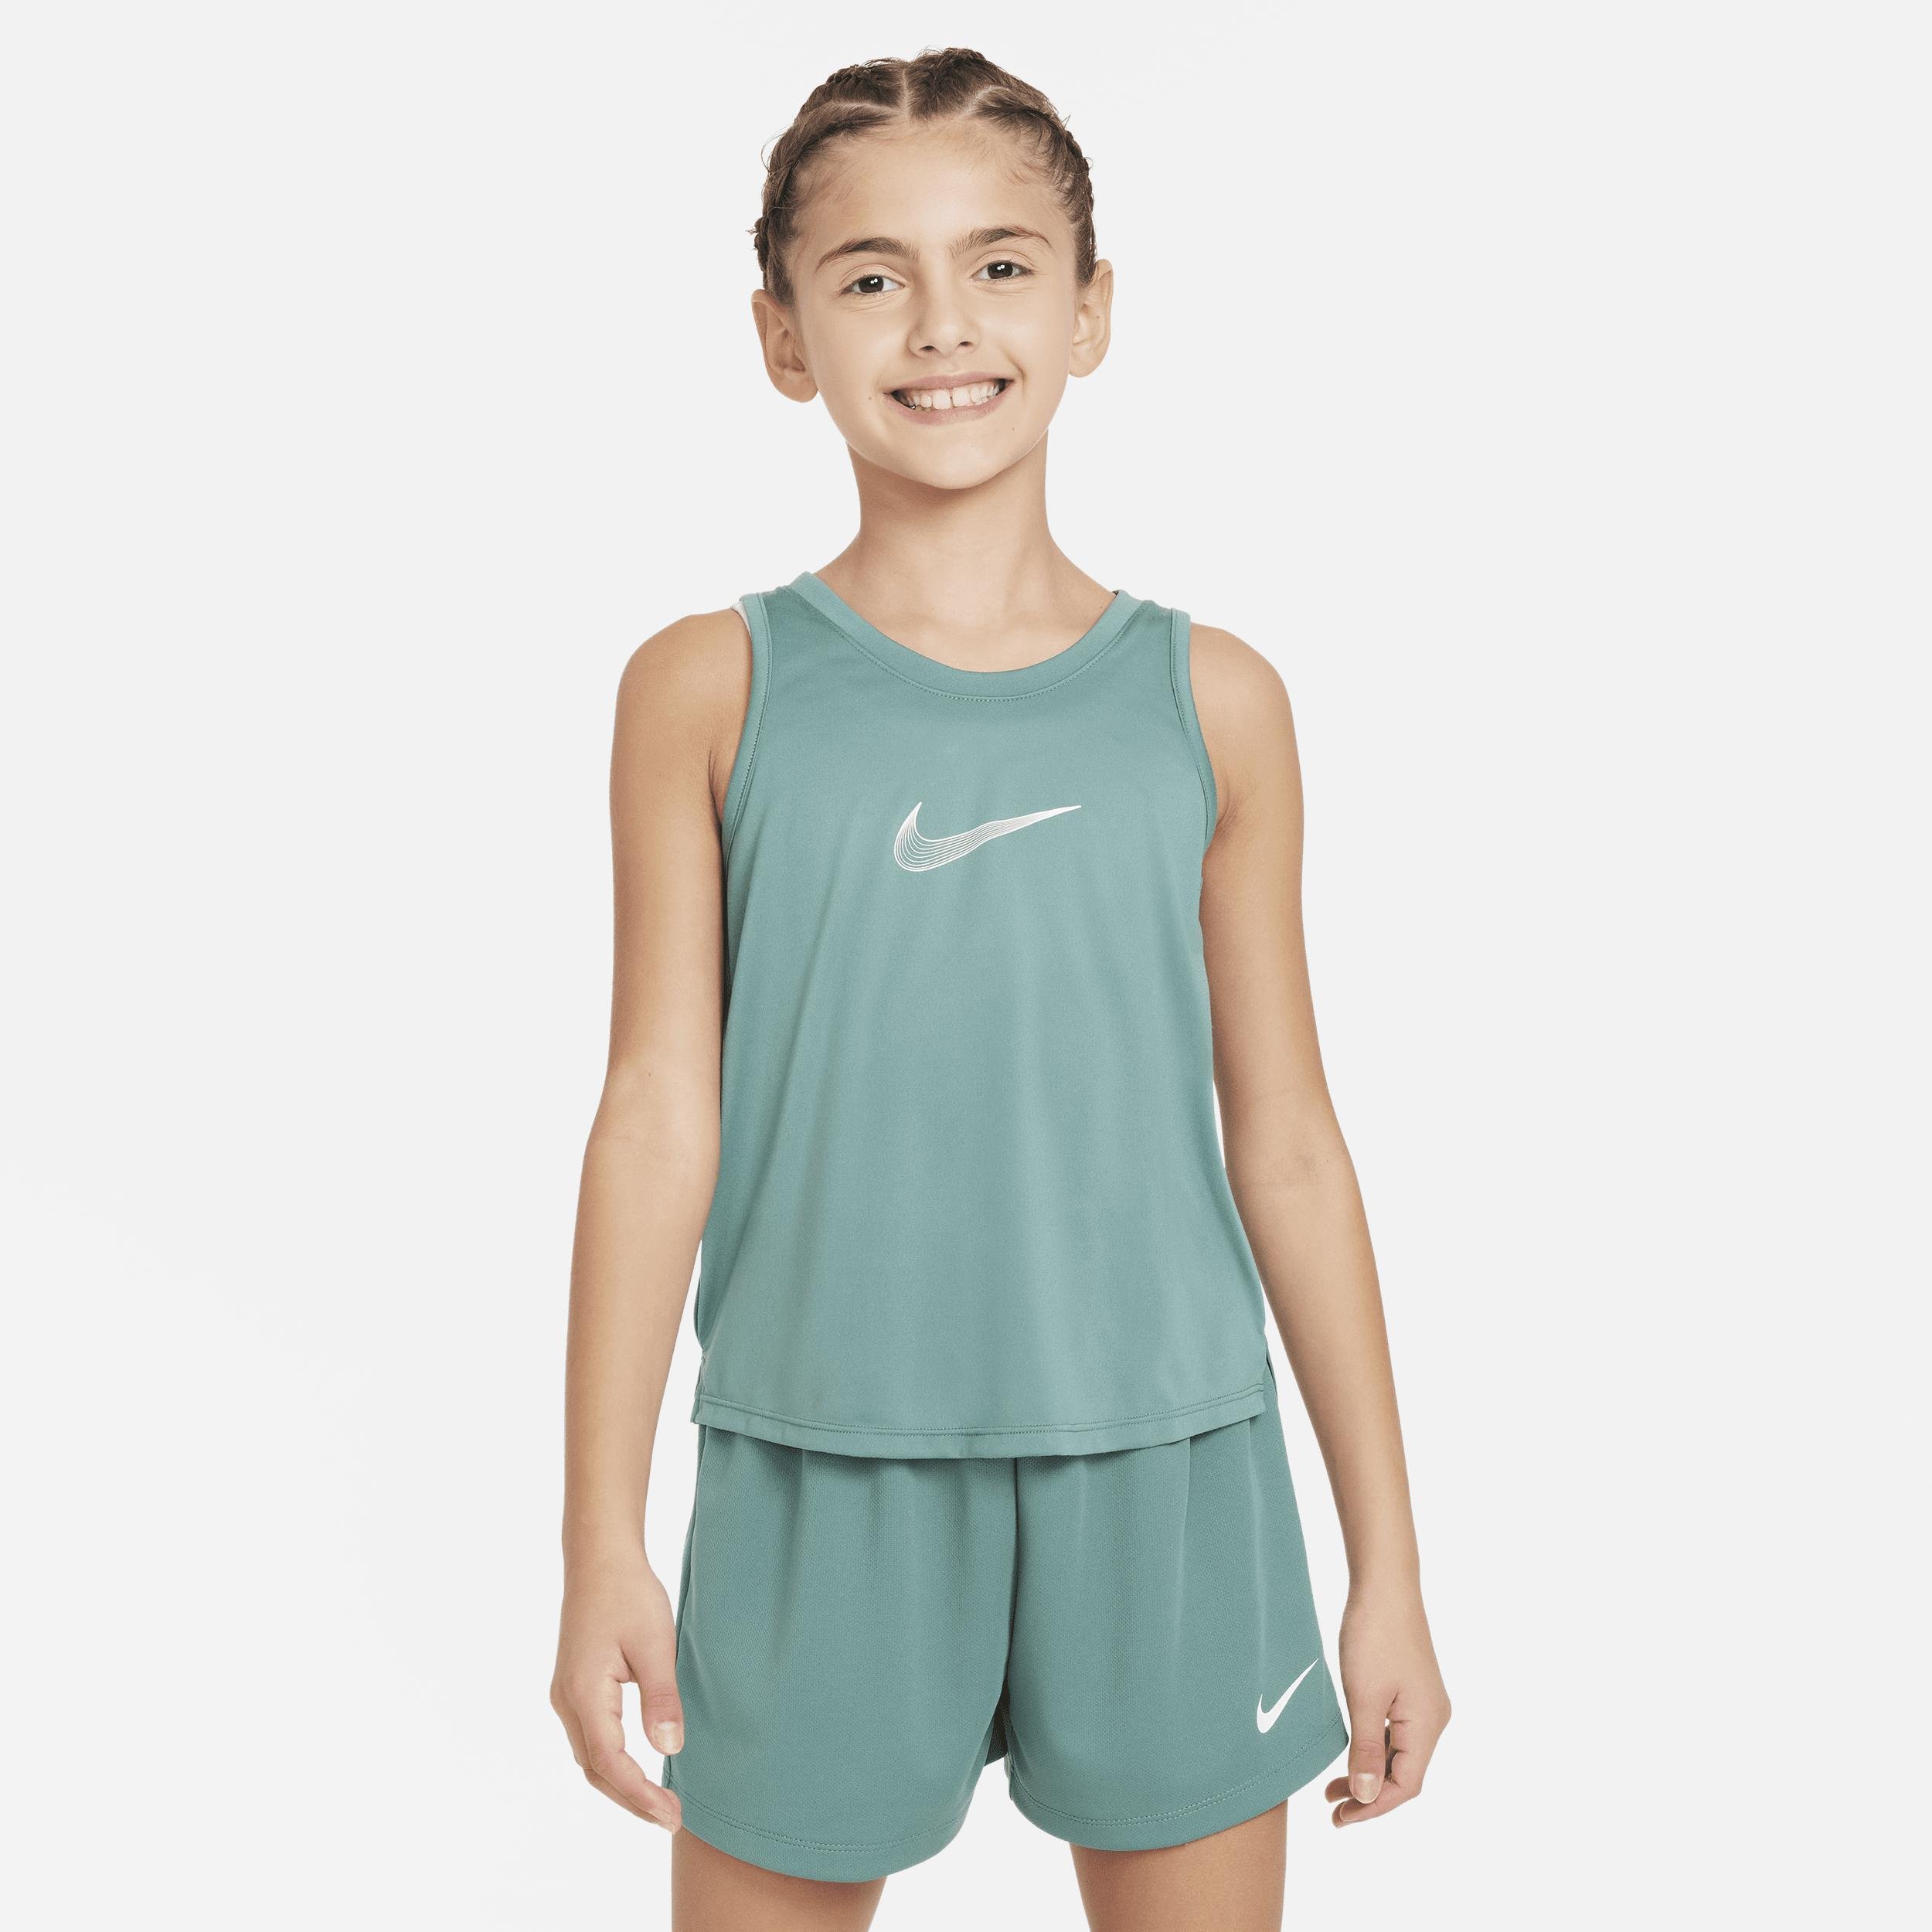 Nike One Big Kids' (Girls') Dri-FIT Training Tank Top by NIKE